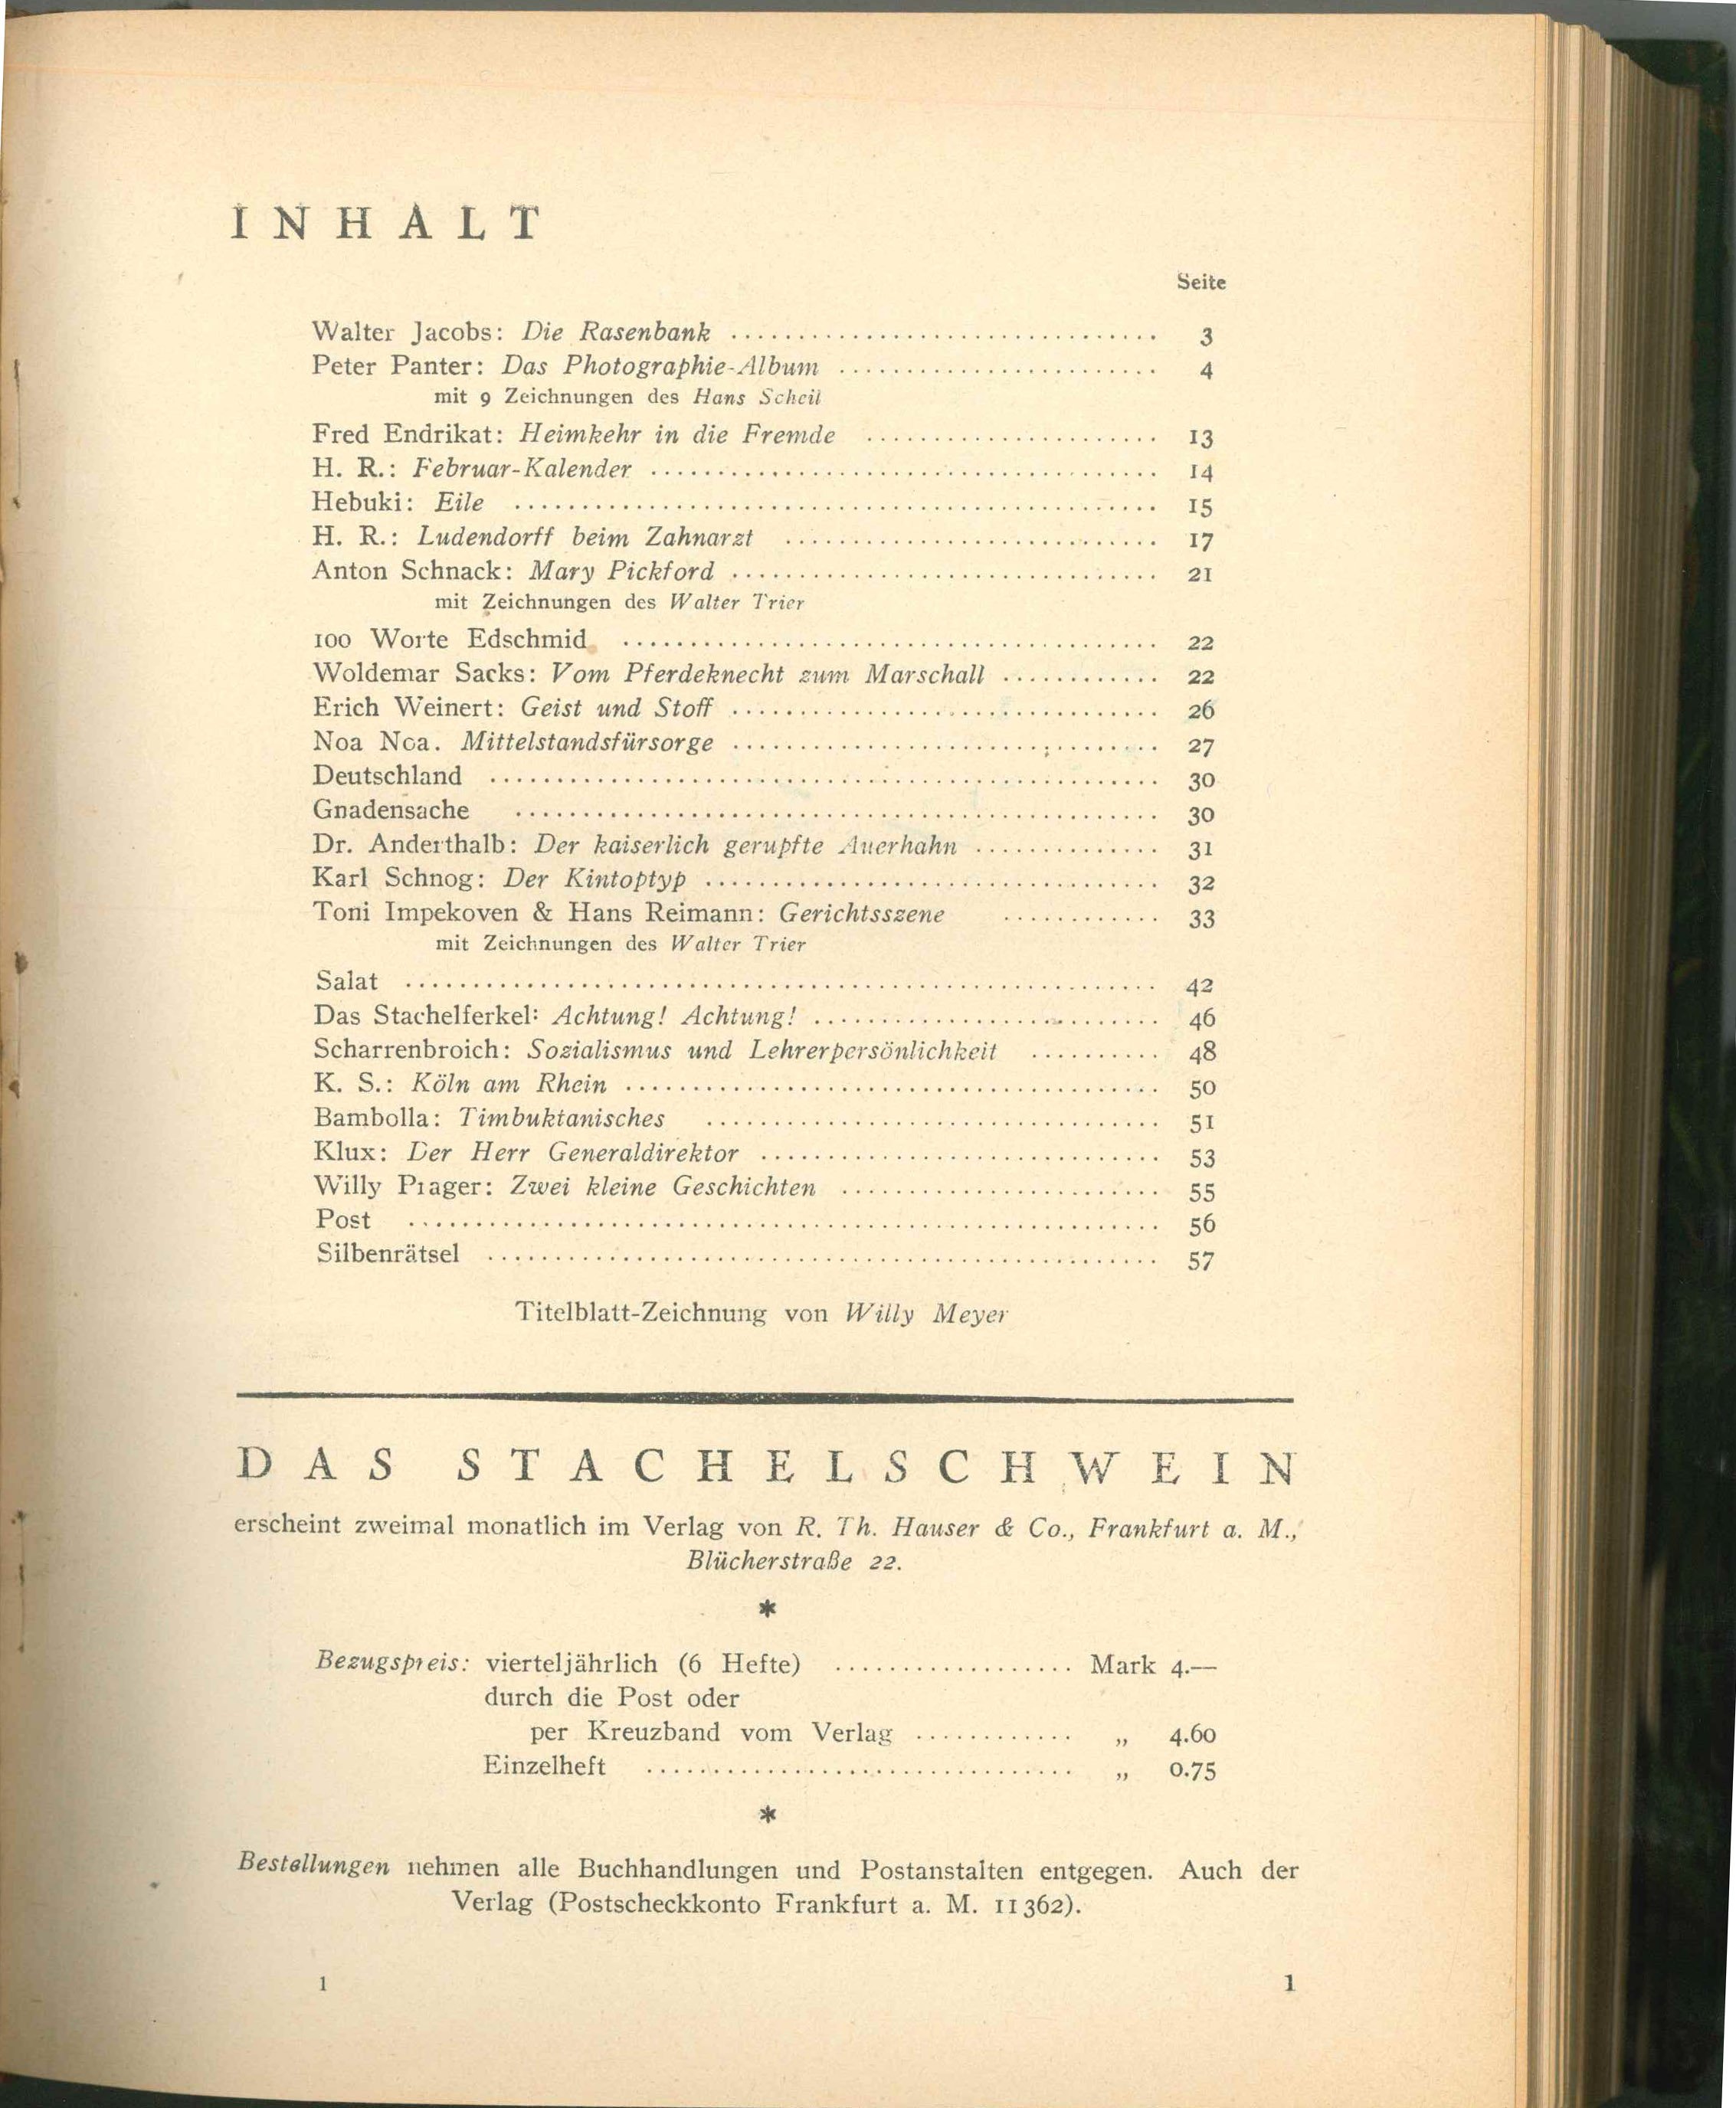 Das Stachelschwein. 8 Hefte 1925 (Kurt Tucholsky Literaturmuseum CC BY-NC-SA)